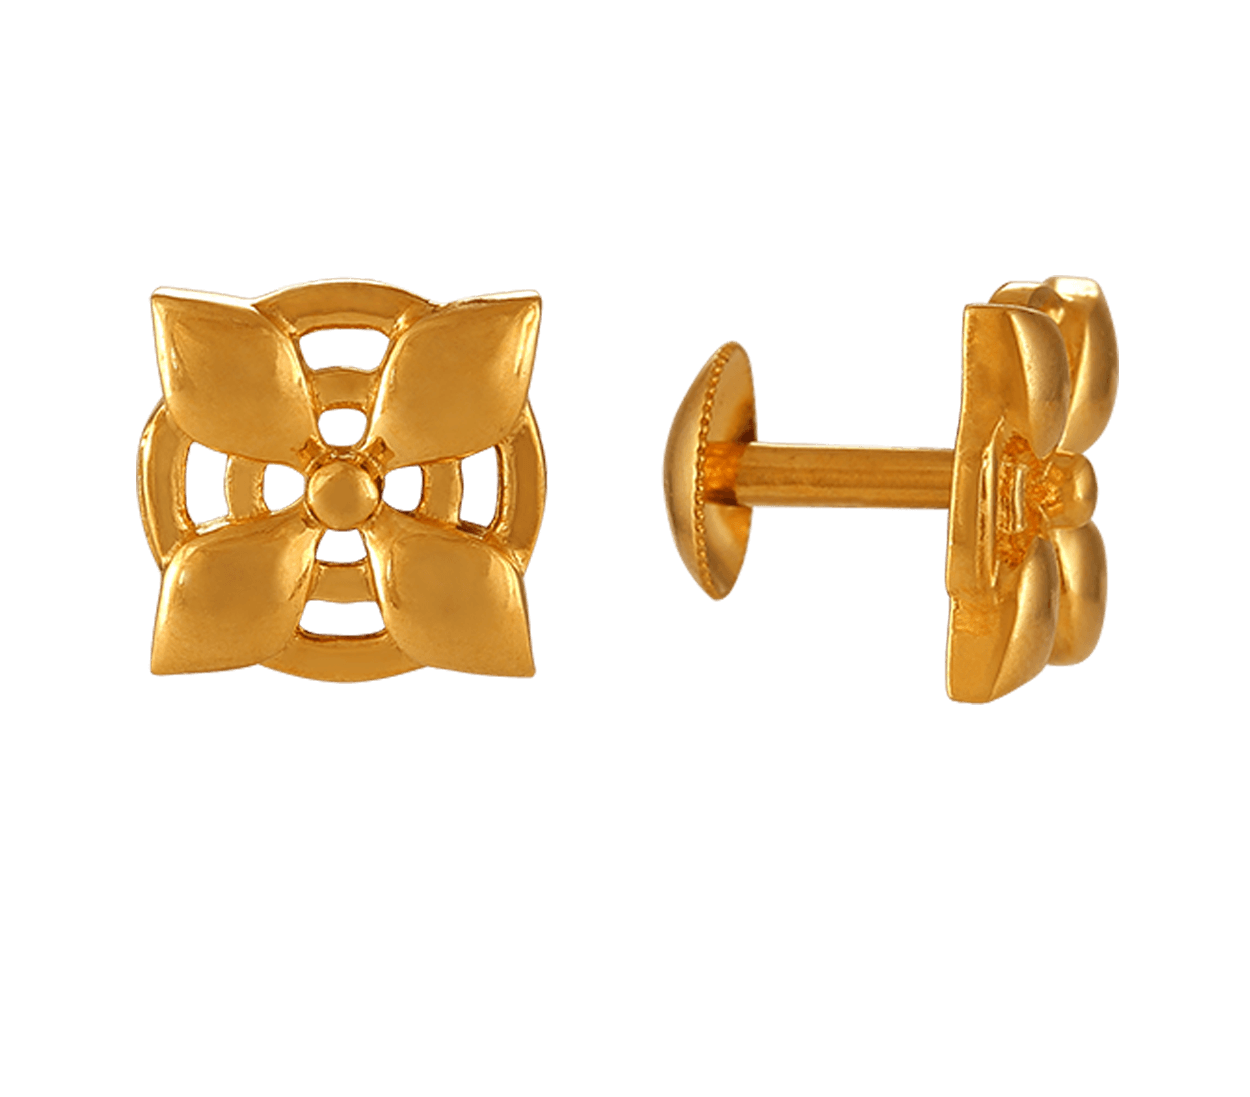 Pure 24K Yellow Gold Earrings Hoop Women Carved Star Surface Earrings  1.5-2g | eBay